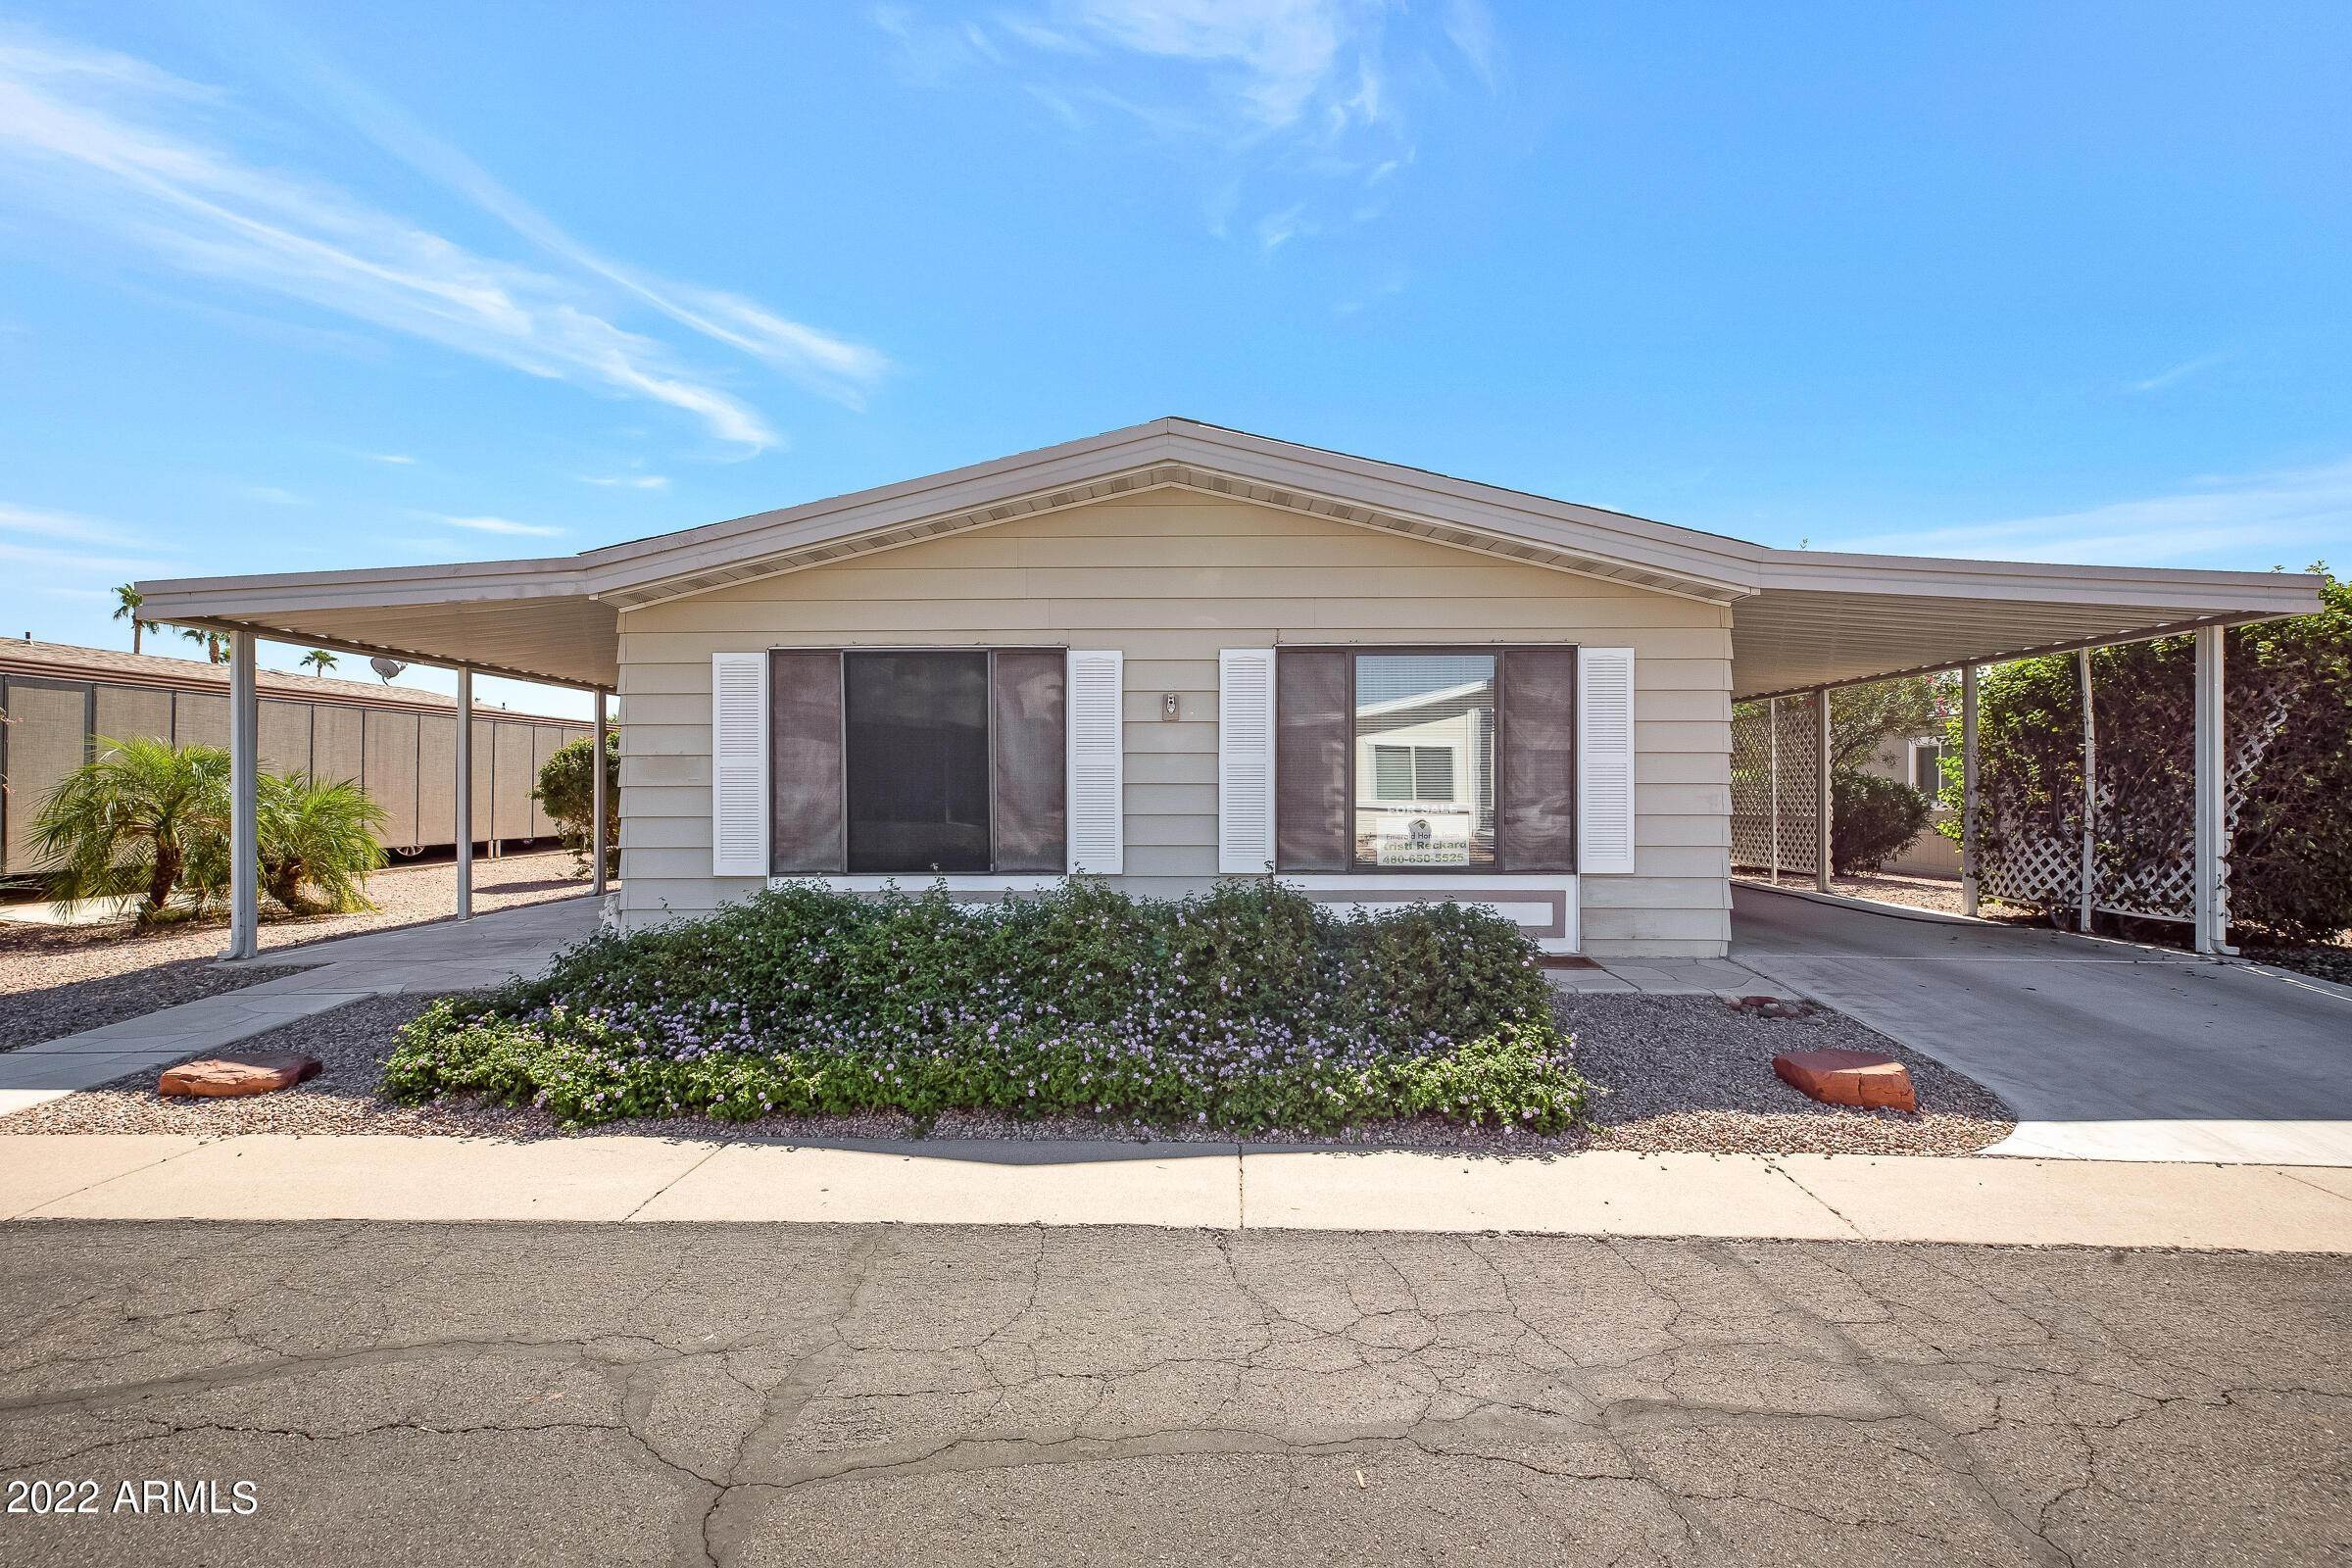 4. Mobile Home for Sale at Mesa, AZ 85215